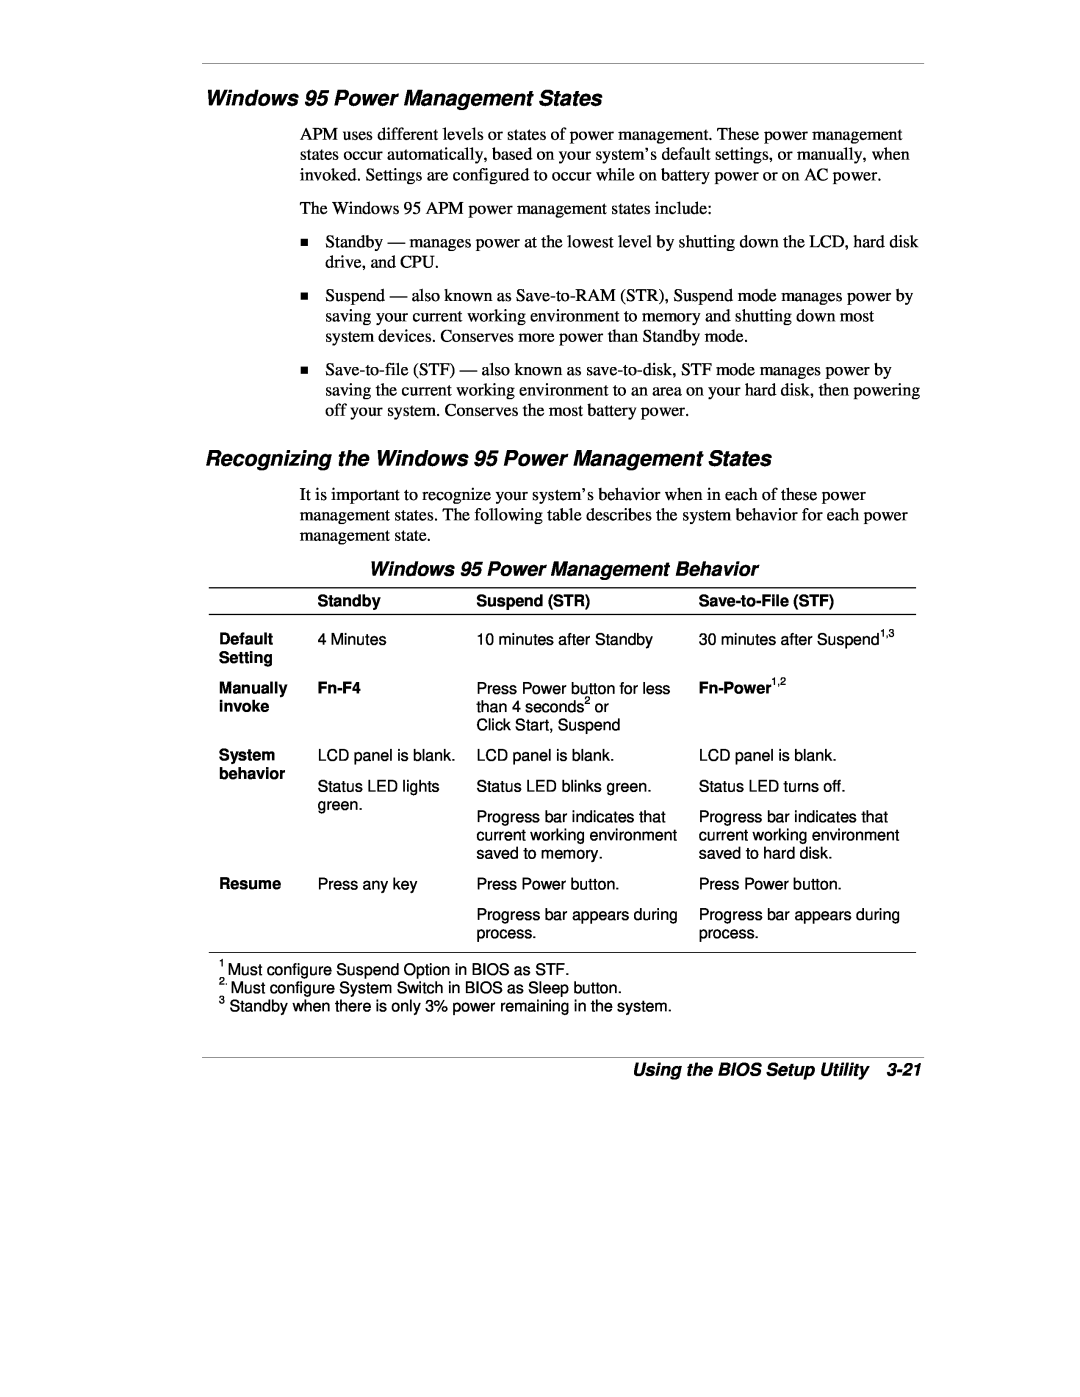 NEC VX manual Recognizing the Windows 95 Power Management States, Windows 95 Power Management Behavior 